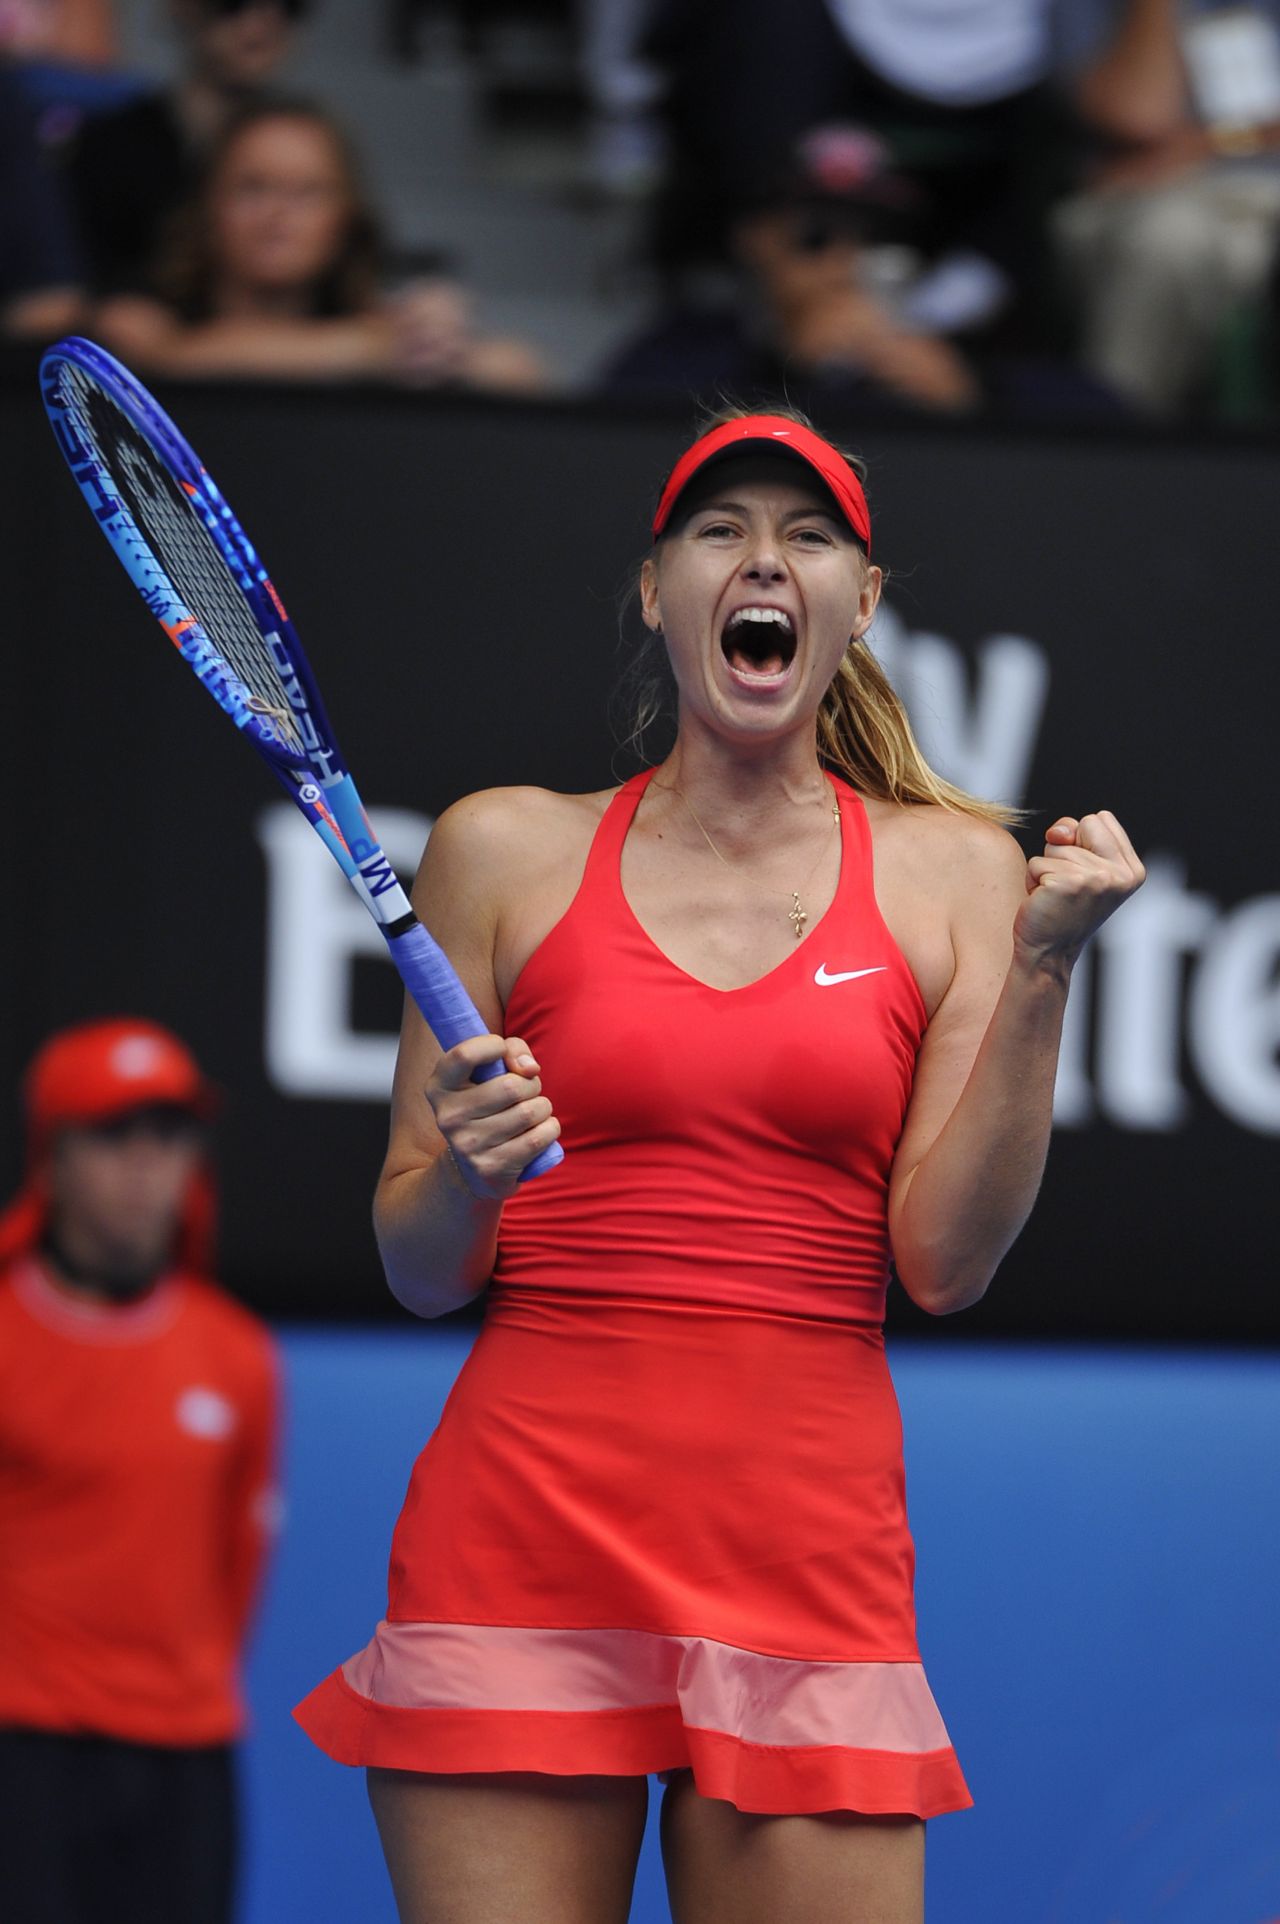 Maria Sharapova – 2015 Australian Open in Melbourne Quarter Final